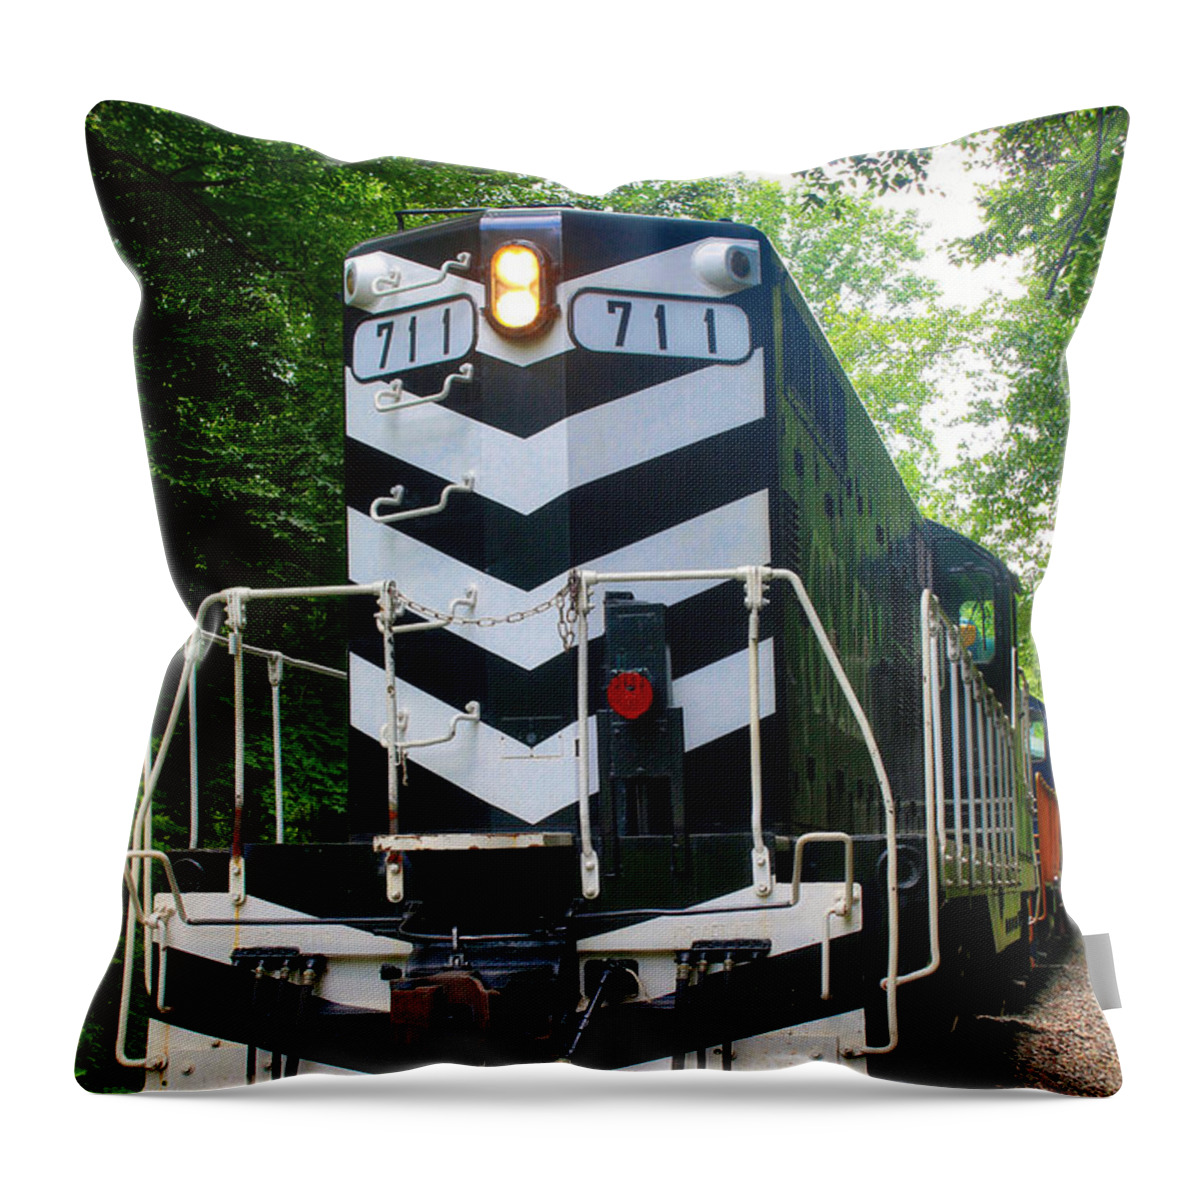 Nunweiler Throw Pillow featuring the photograph Smoky Mountain Railroad by Nunweiler Photography